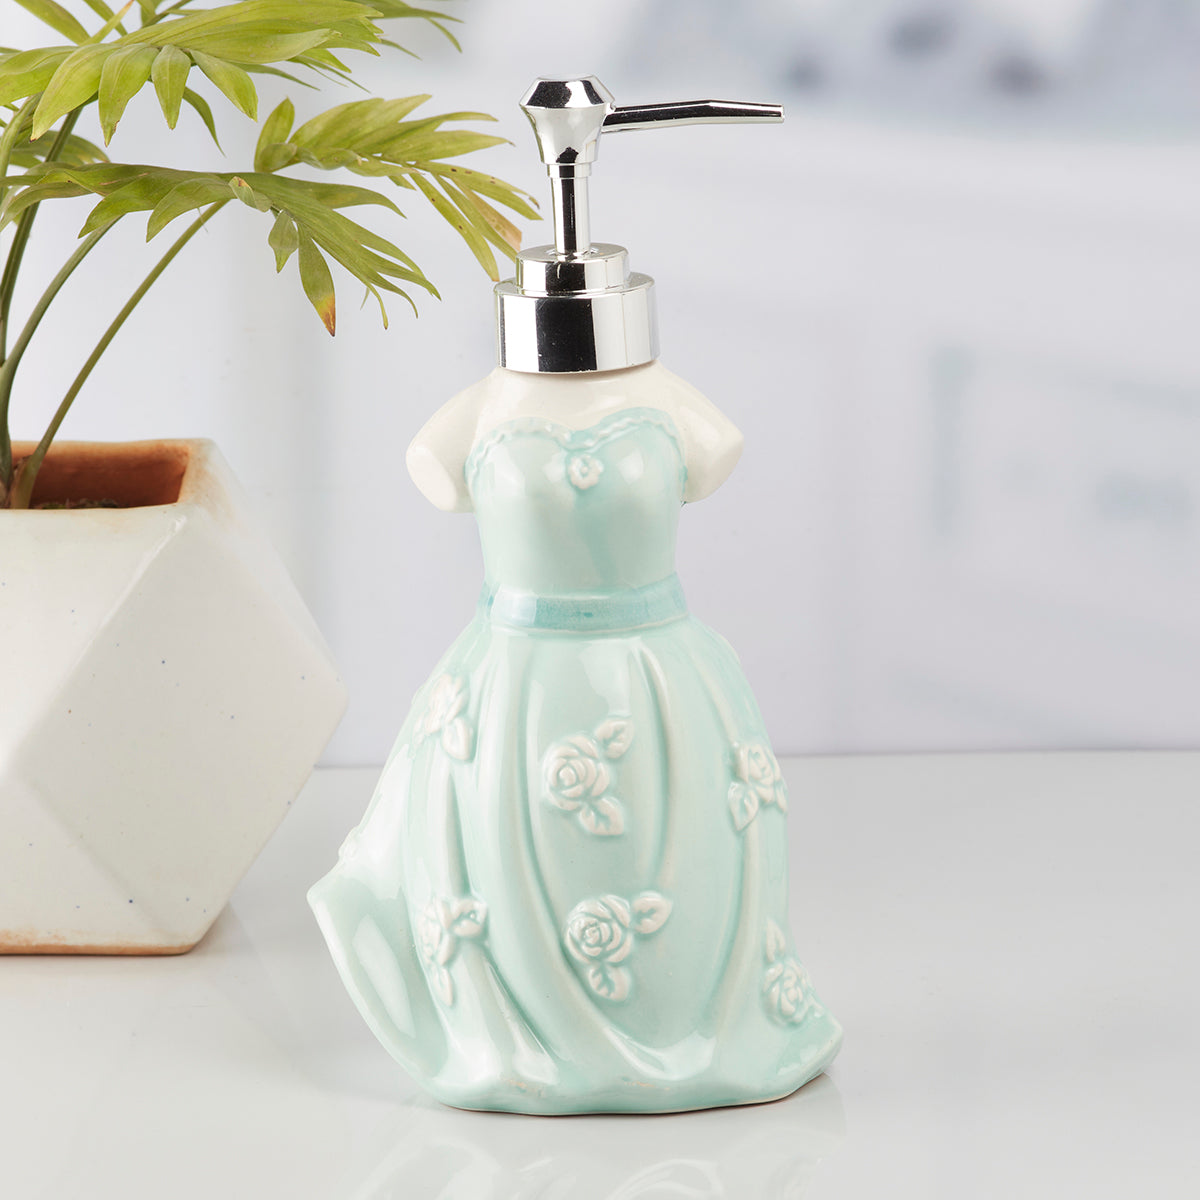 Ceramic Soap Dispenser handwash Pump for Bathroom, Set of 1, Green (10162)